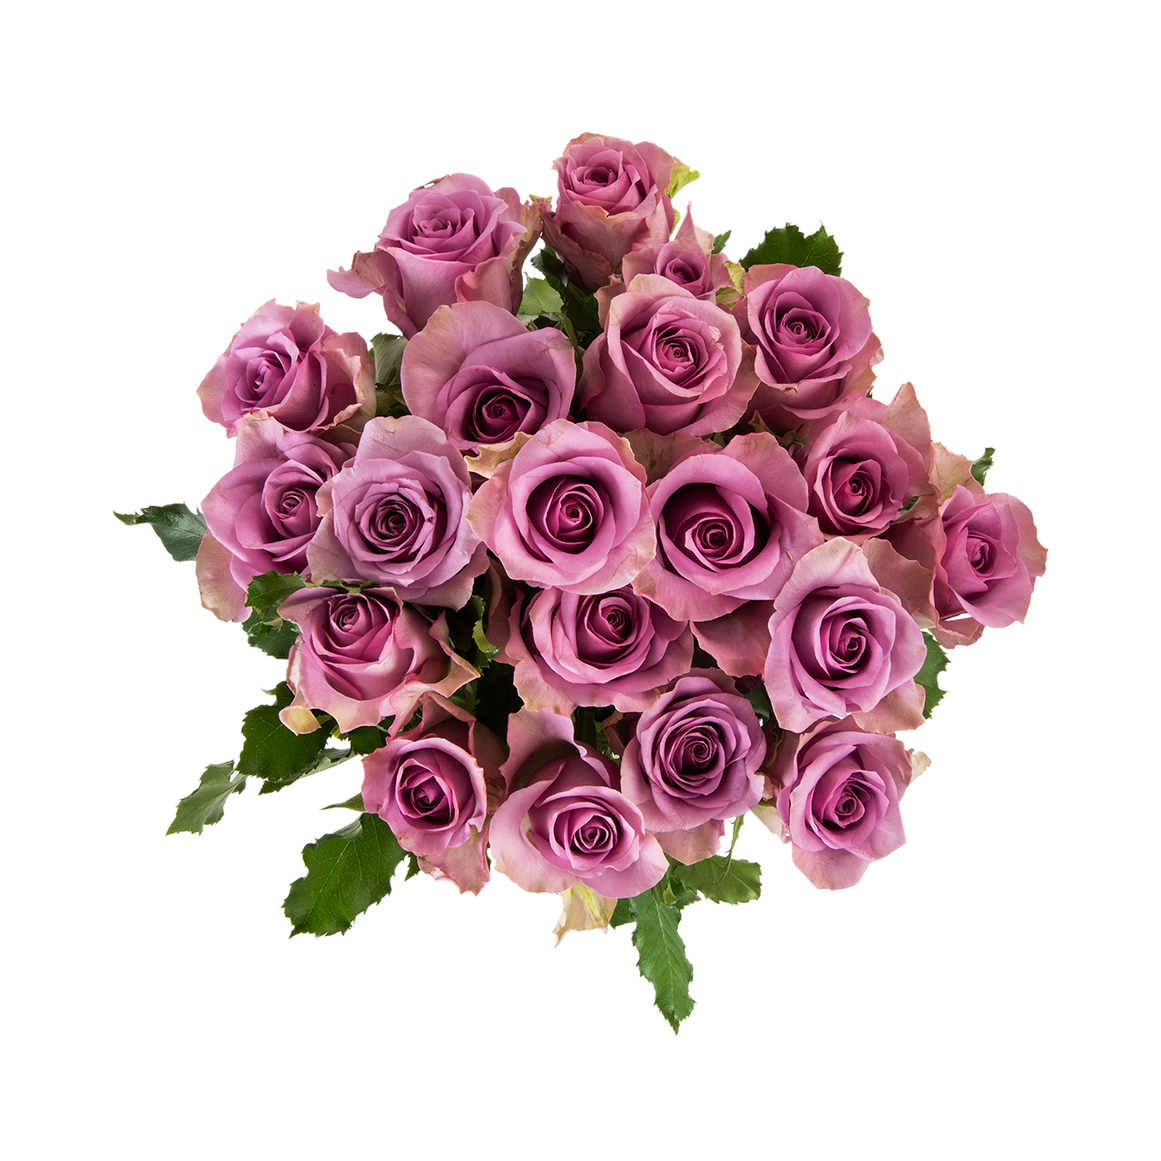 Bulk Roses 50 cm 20 Stems | Woolworths.co.za